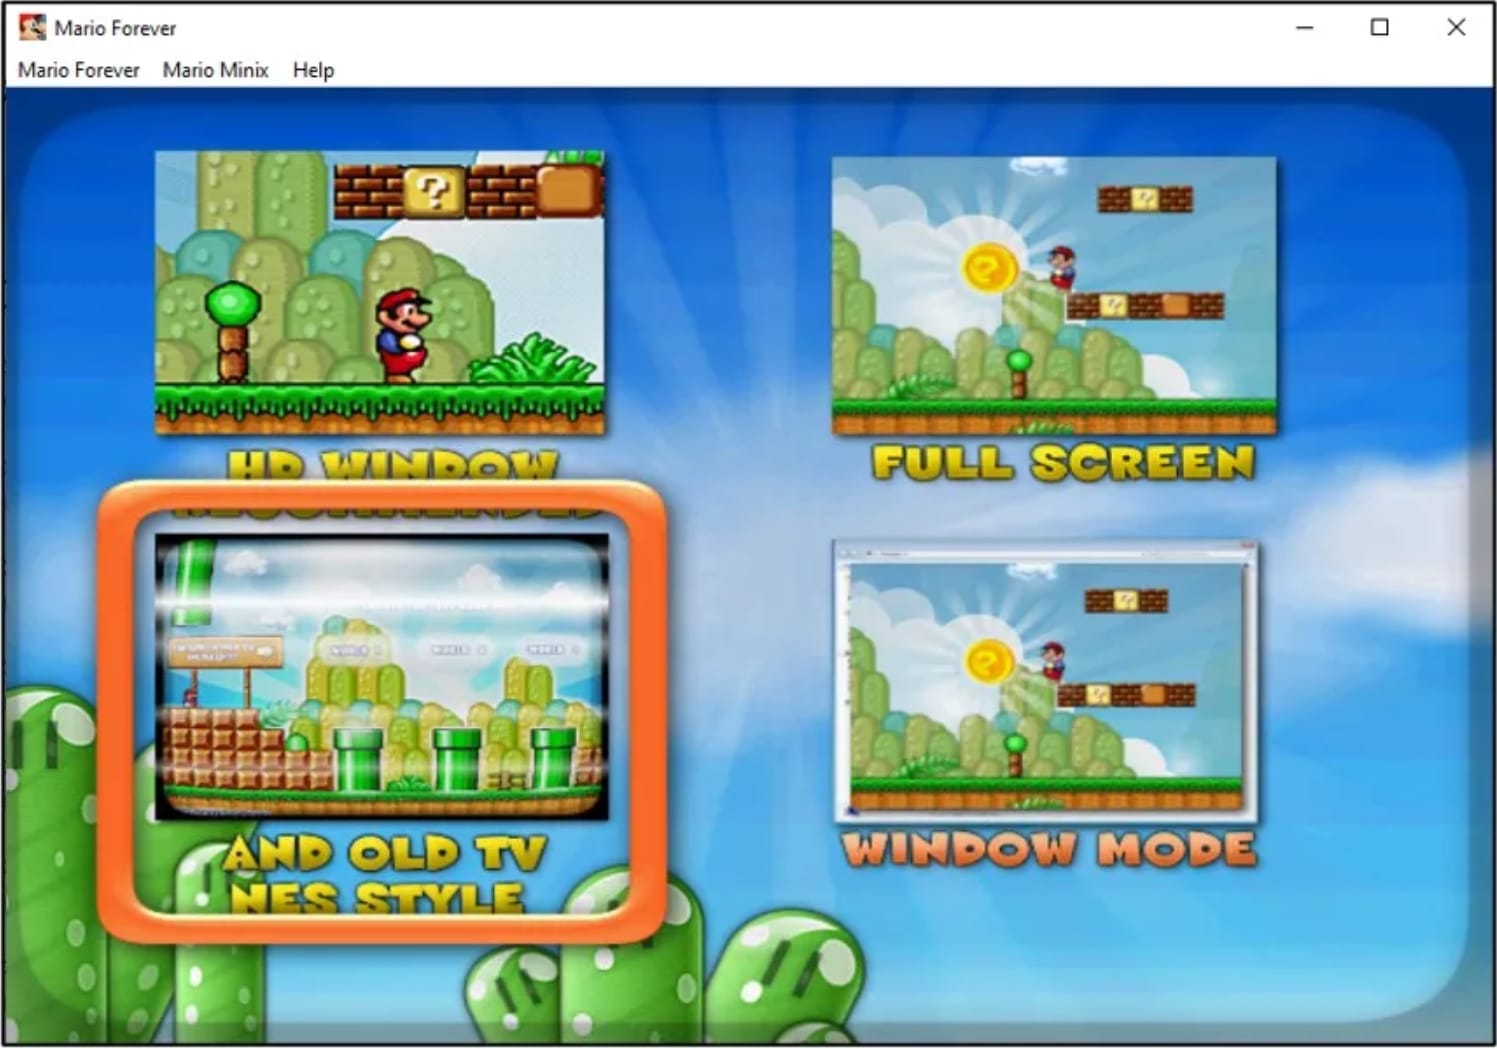 Trojanized Super Mario game used to install Windows malware